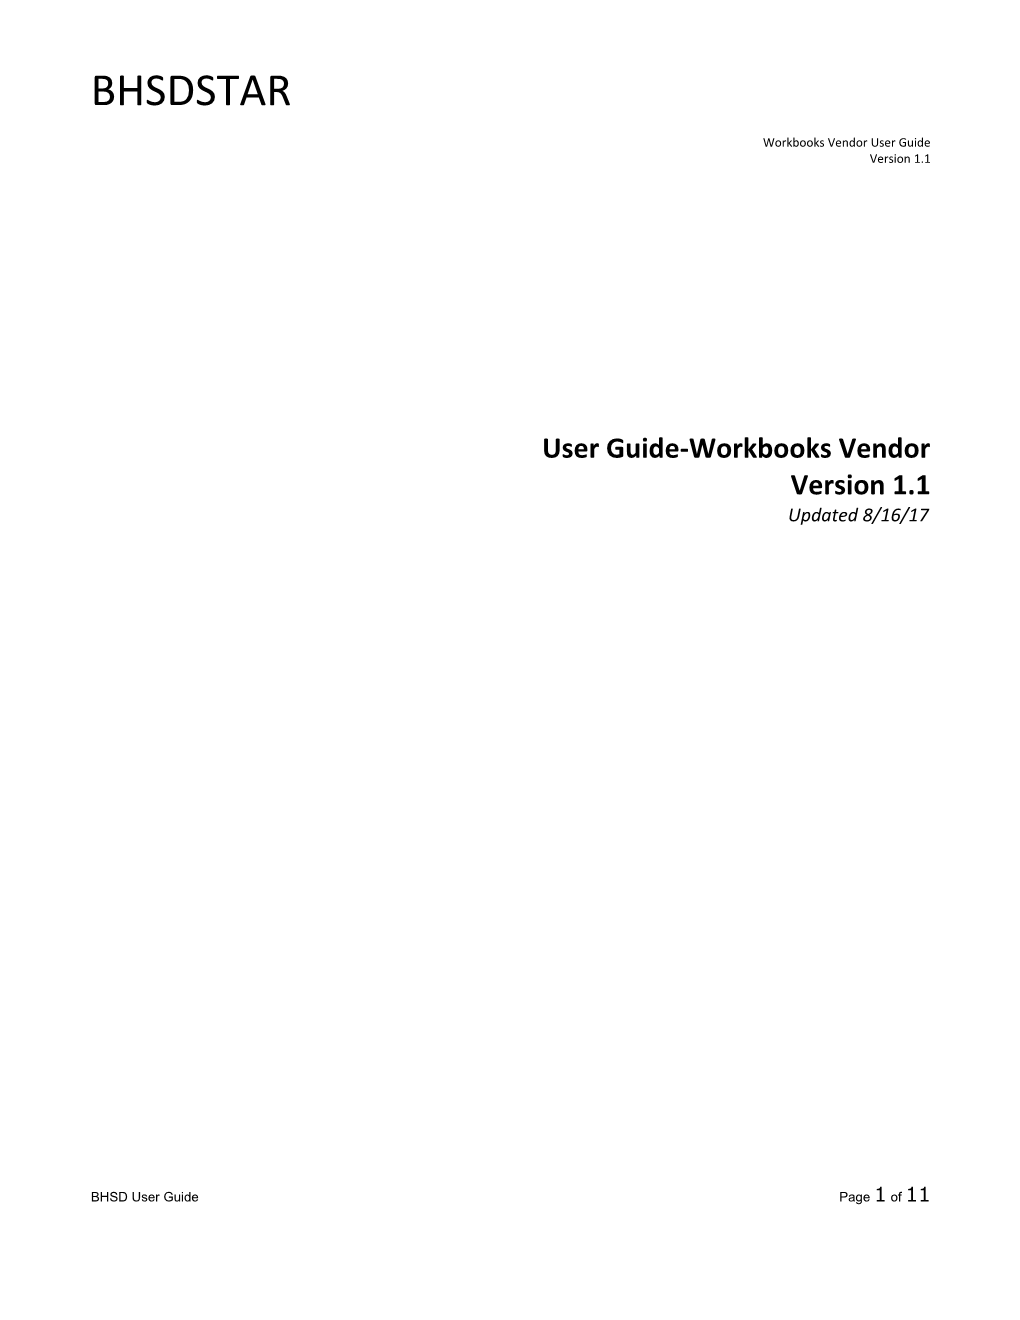 User Guide-Workbooksvendor